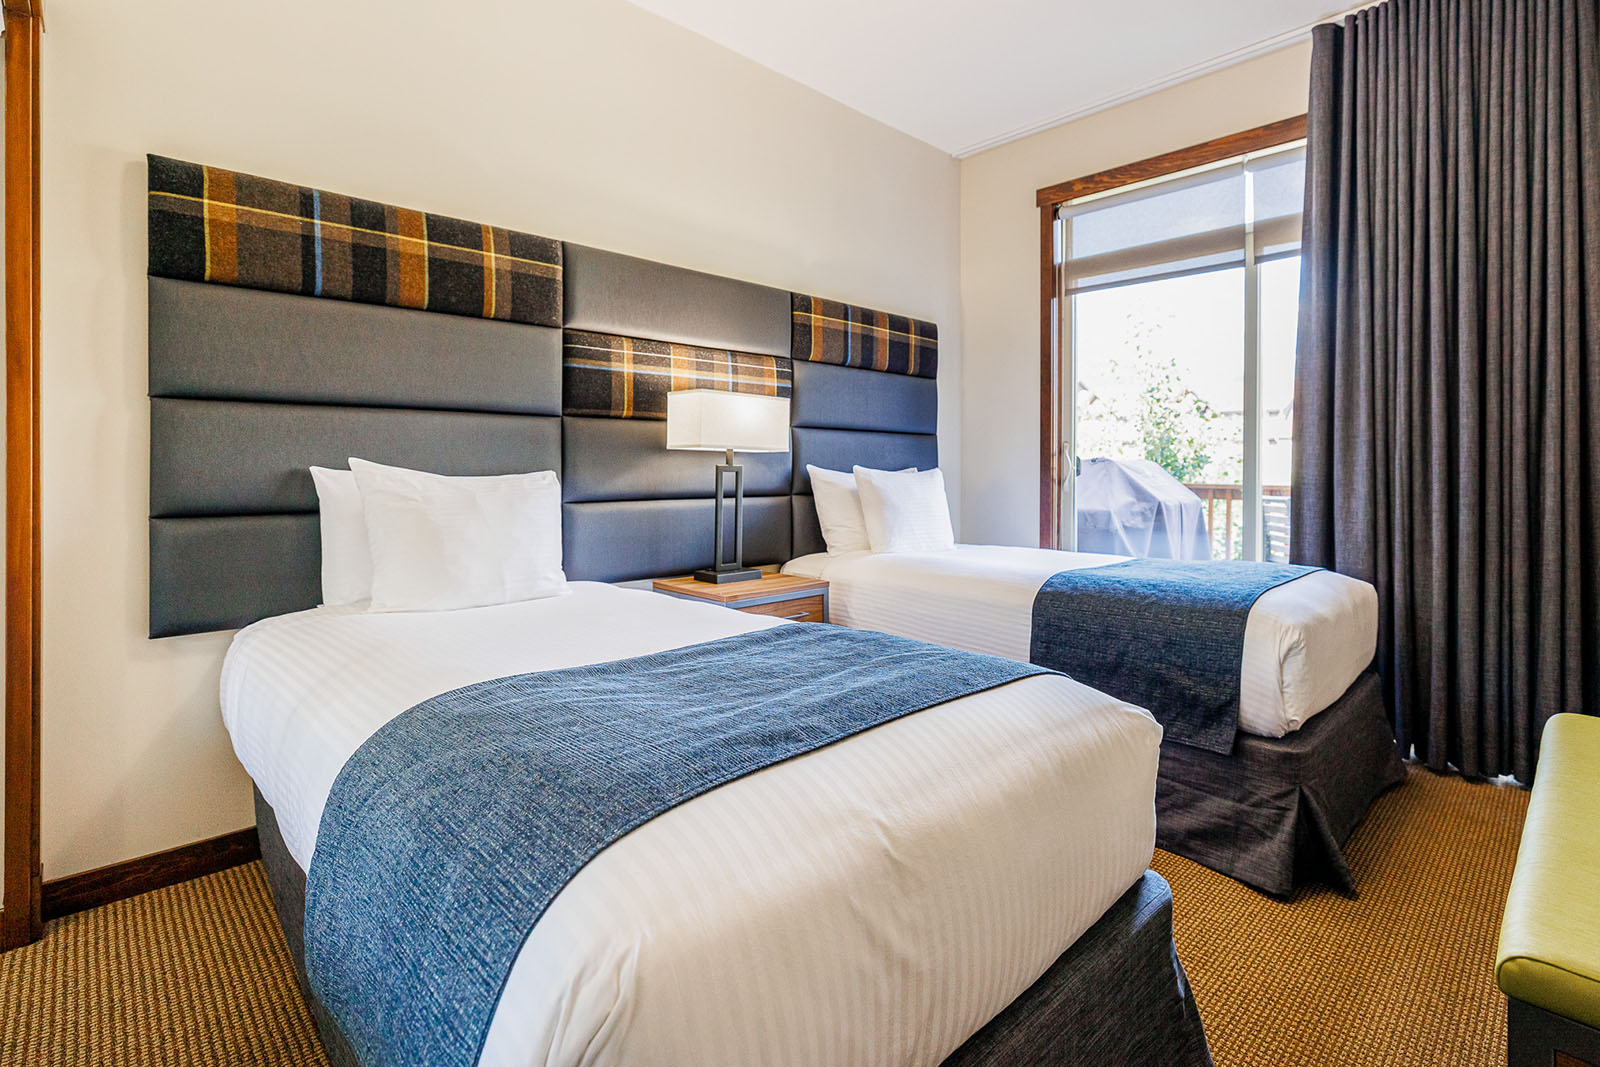 Stoneridge Mountain Resort Canmore - twin bedroom